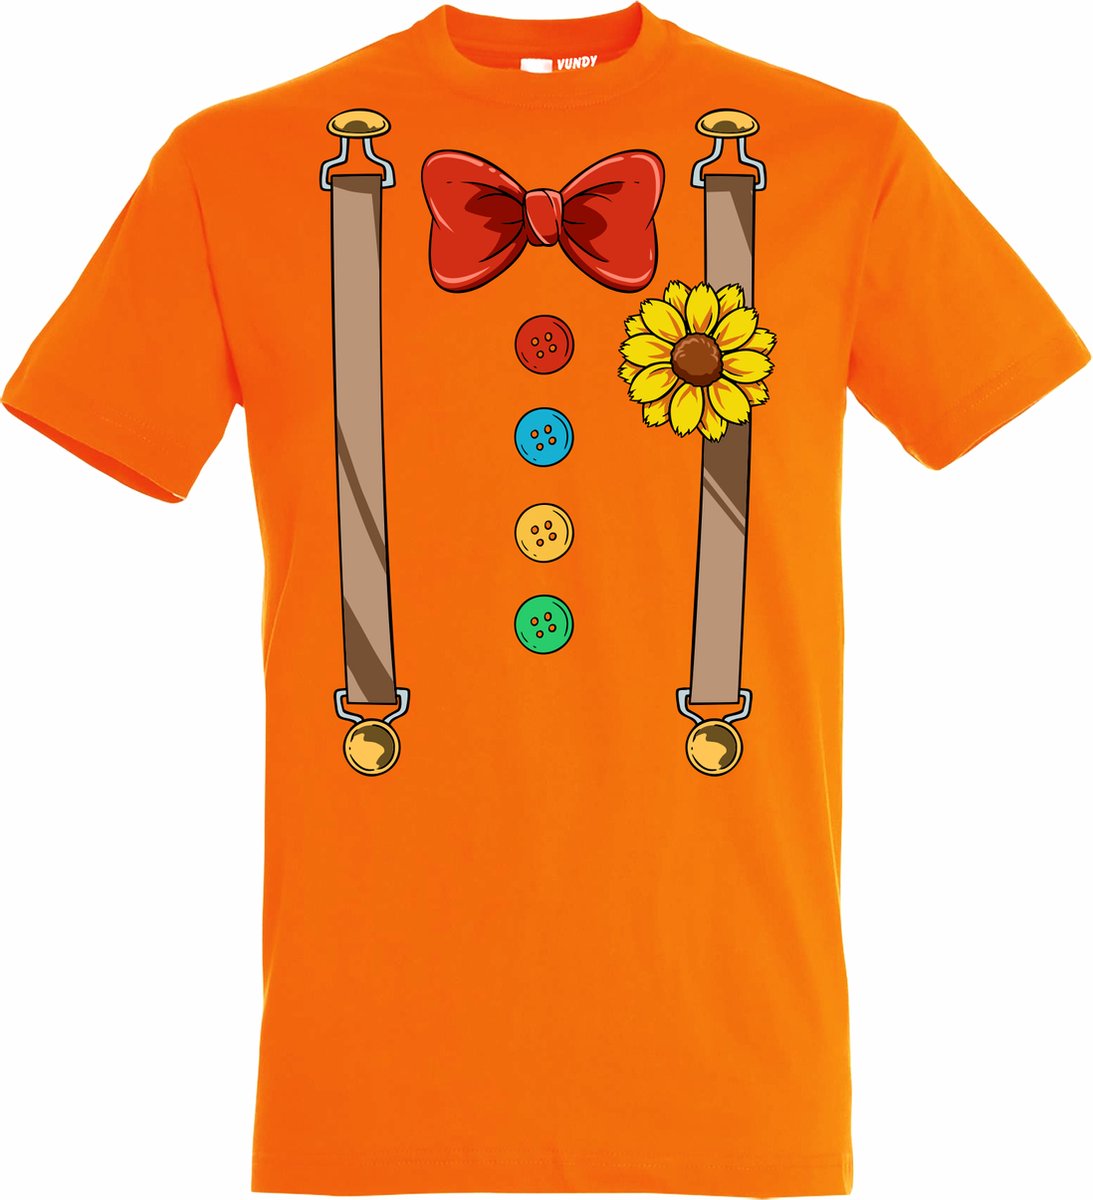 T-shirt kinderen Bretels Kostuum | Carnaval | Carnavalskleding Kinderen Baby | Oranje | maat 80